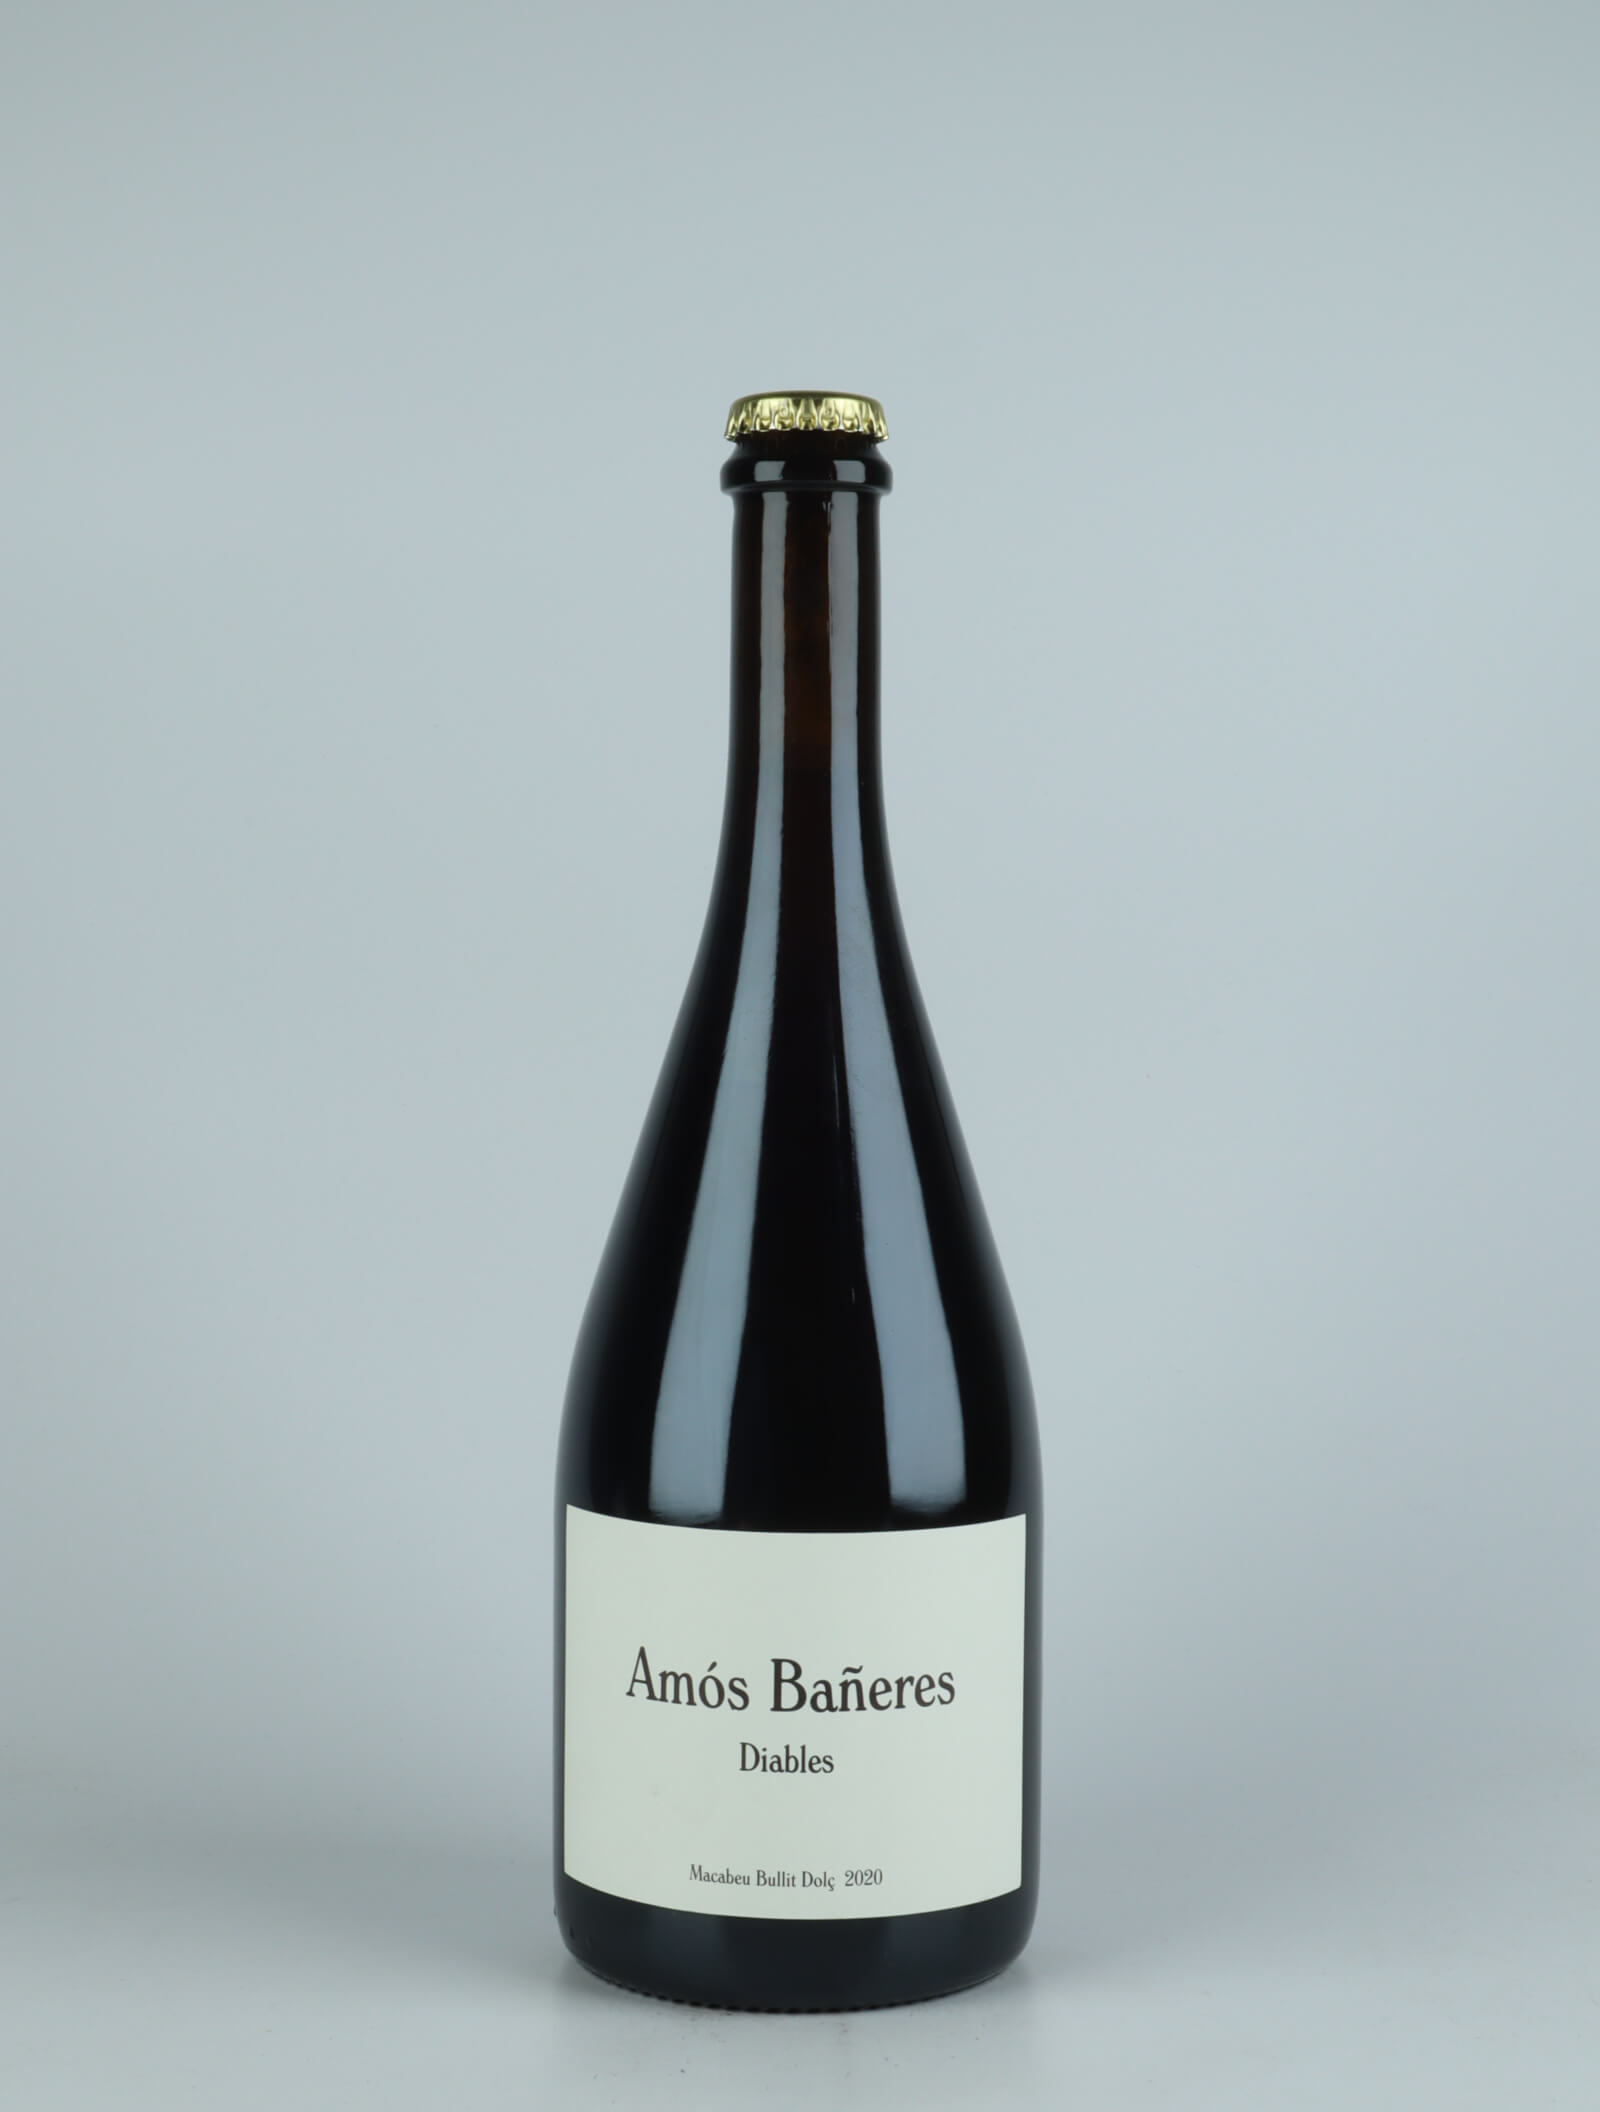 En flaske 2020 Diables Sød vin fra Amós Bañeres, Penedès i Spanien